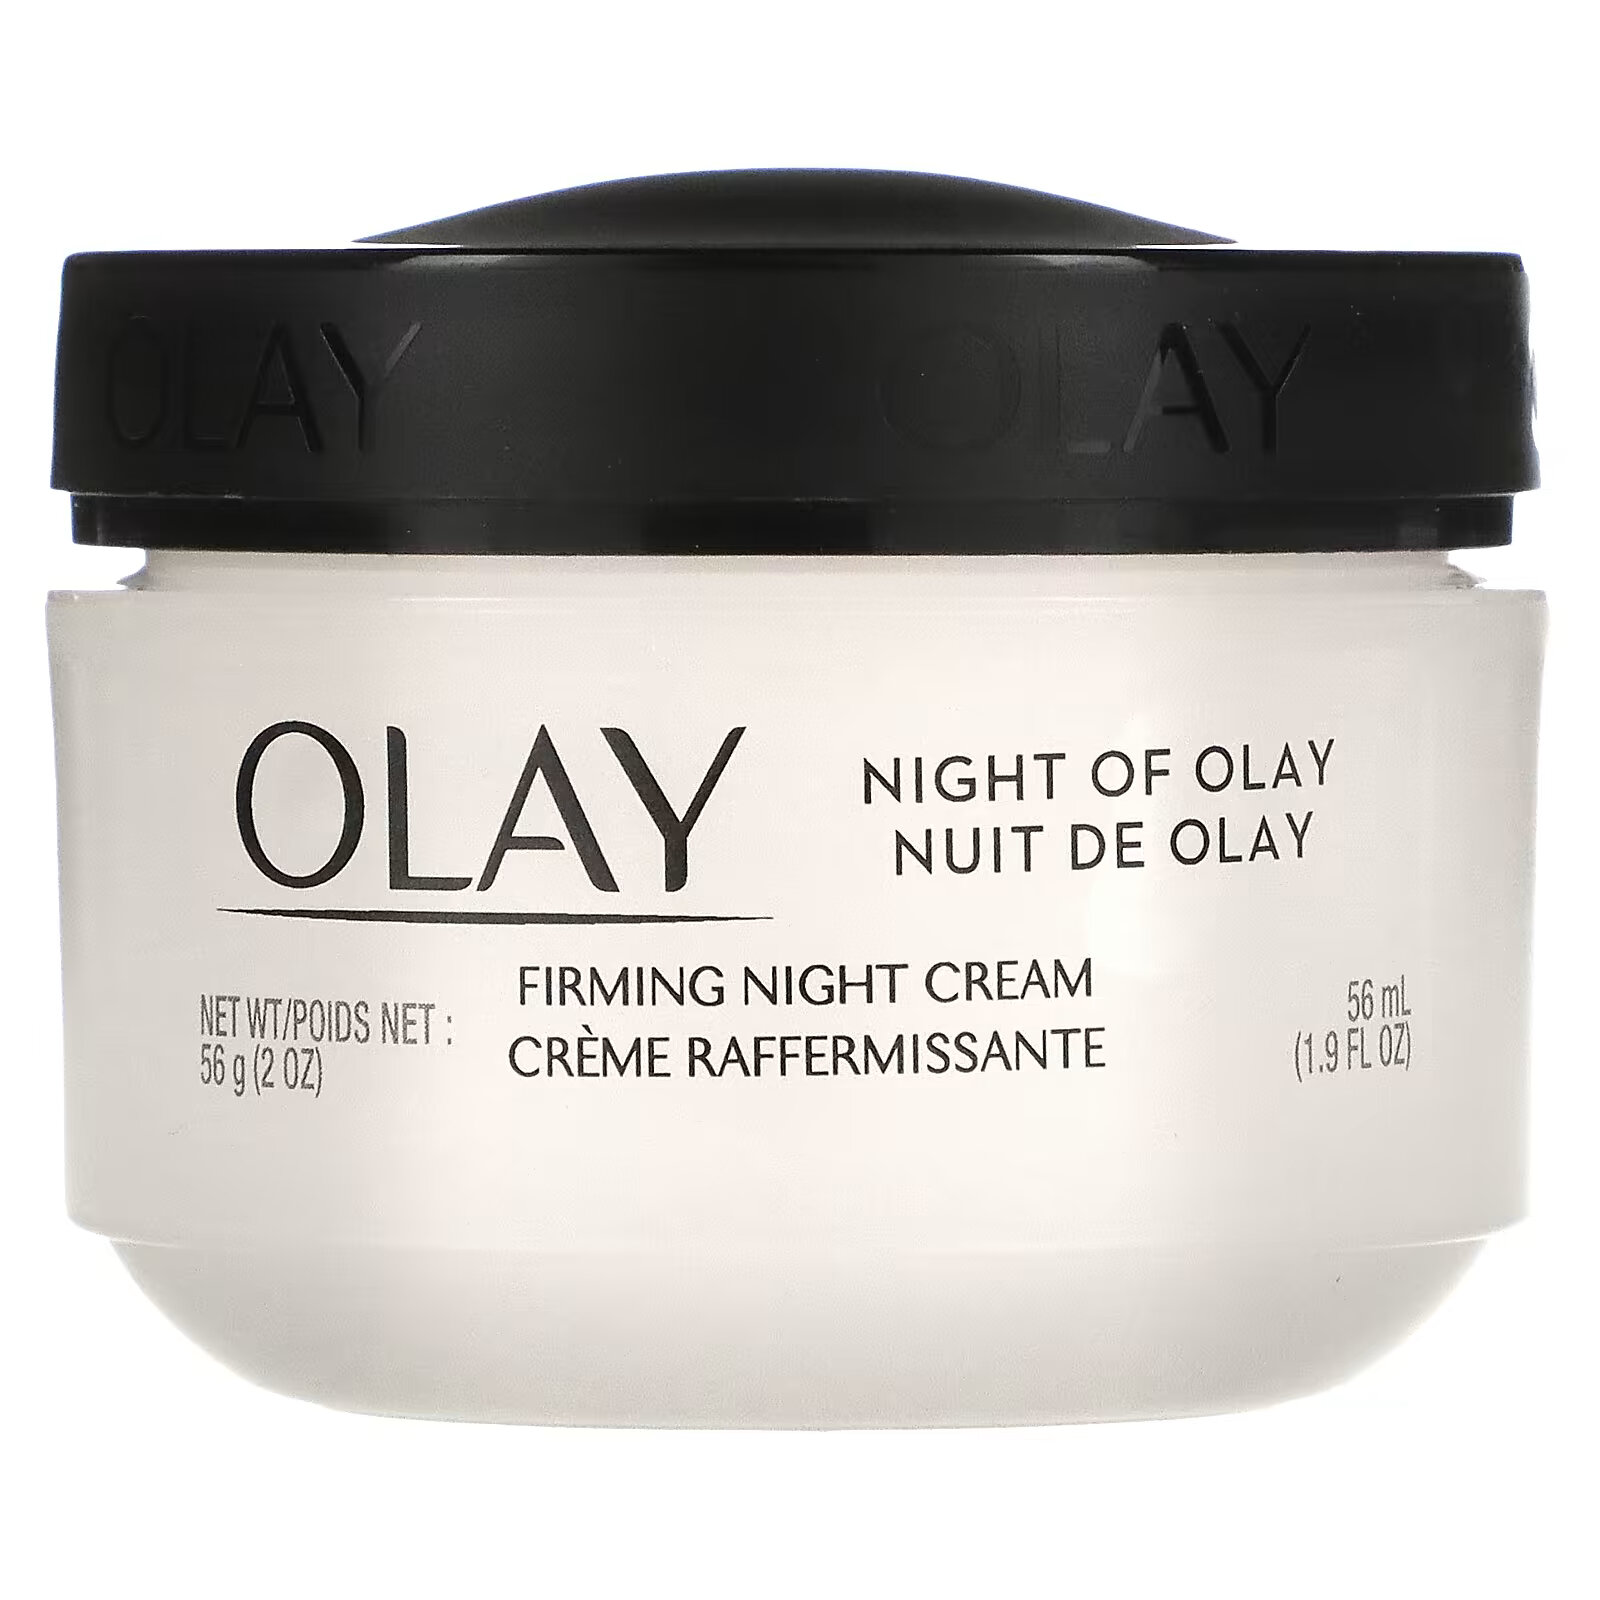 Olay, Night of Olay, укрепляющий ночной крем, 56 мл (1,9 жидк. Унции) olay age defying classic ночной крем 60 мл 2 жидк унции